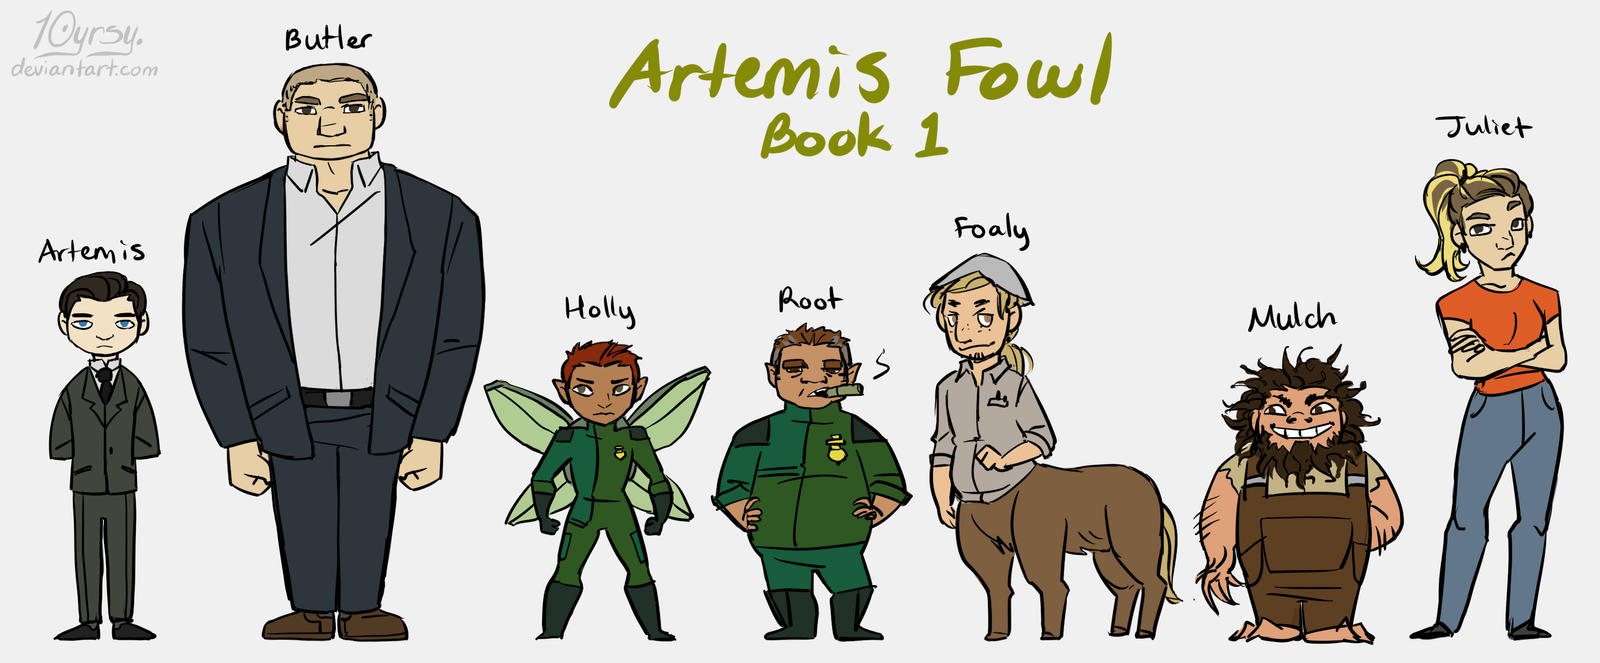 Artemis Fowl lineup by 10yrsy on DeviantArt